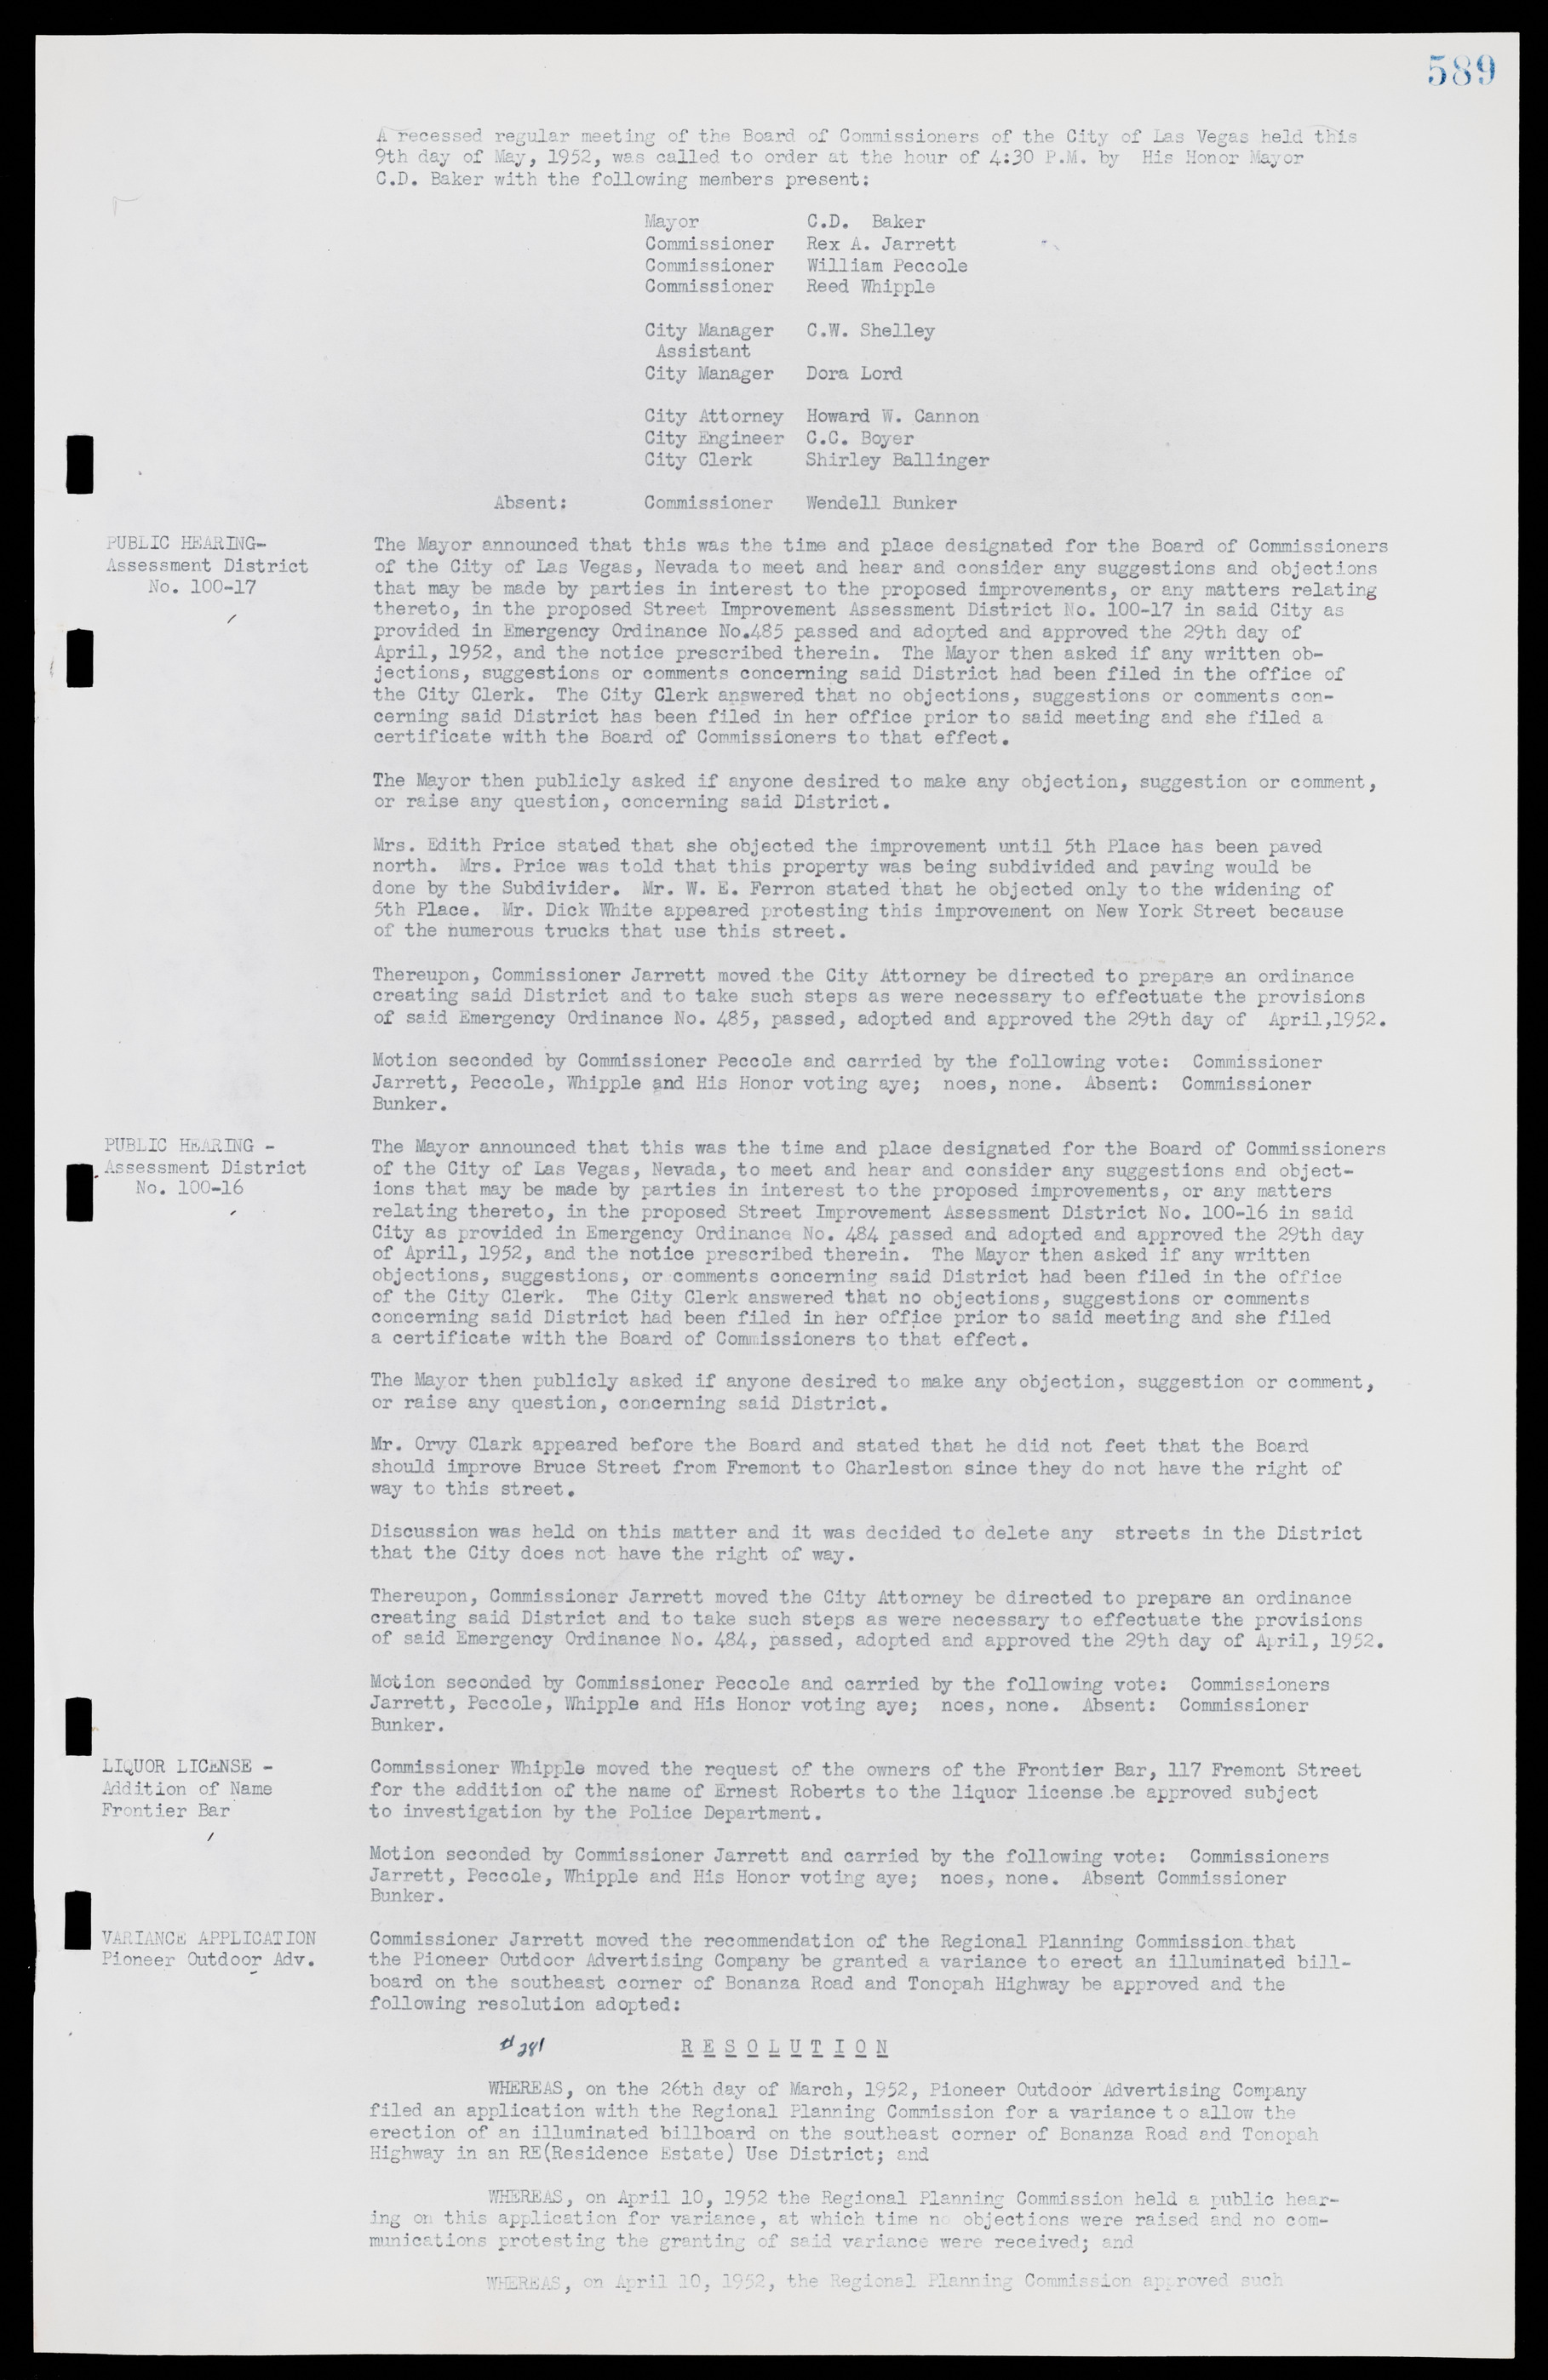 Las Vegas City Commission Minutes, November 7, 1949 to May 21, 1952, lvc000007-607